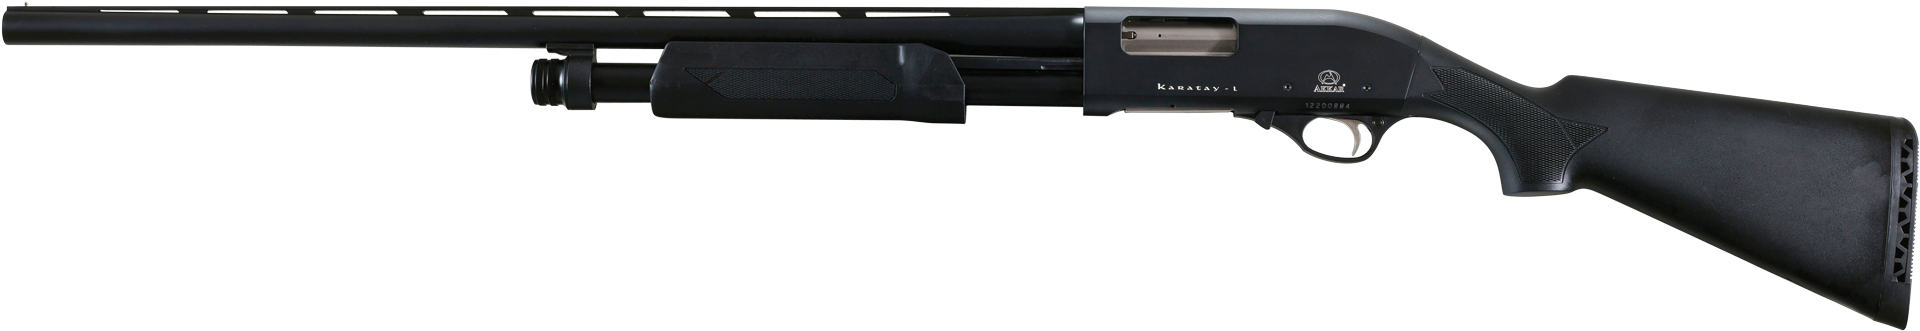 Remington 7600 Pistol Grip Stock (2000x2000), Png Download